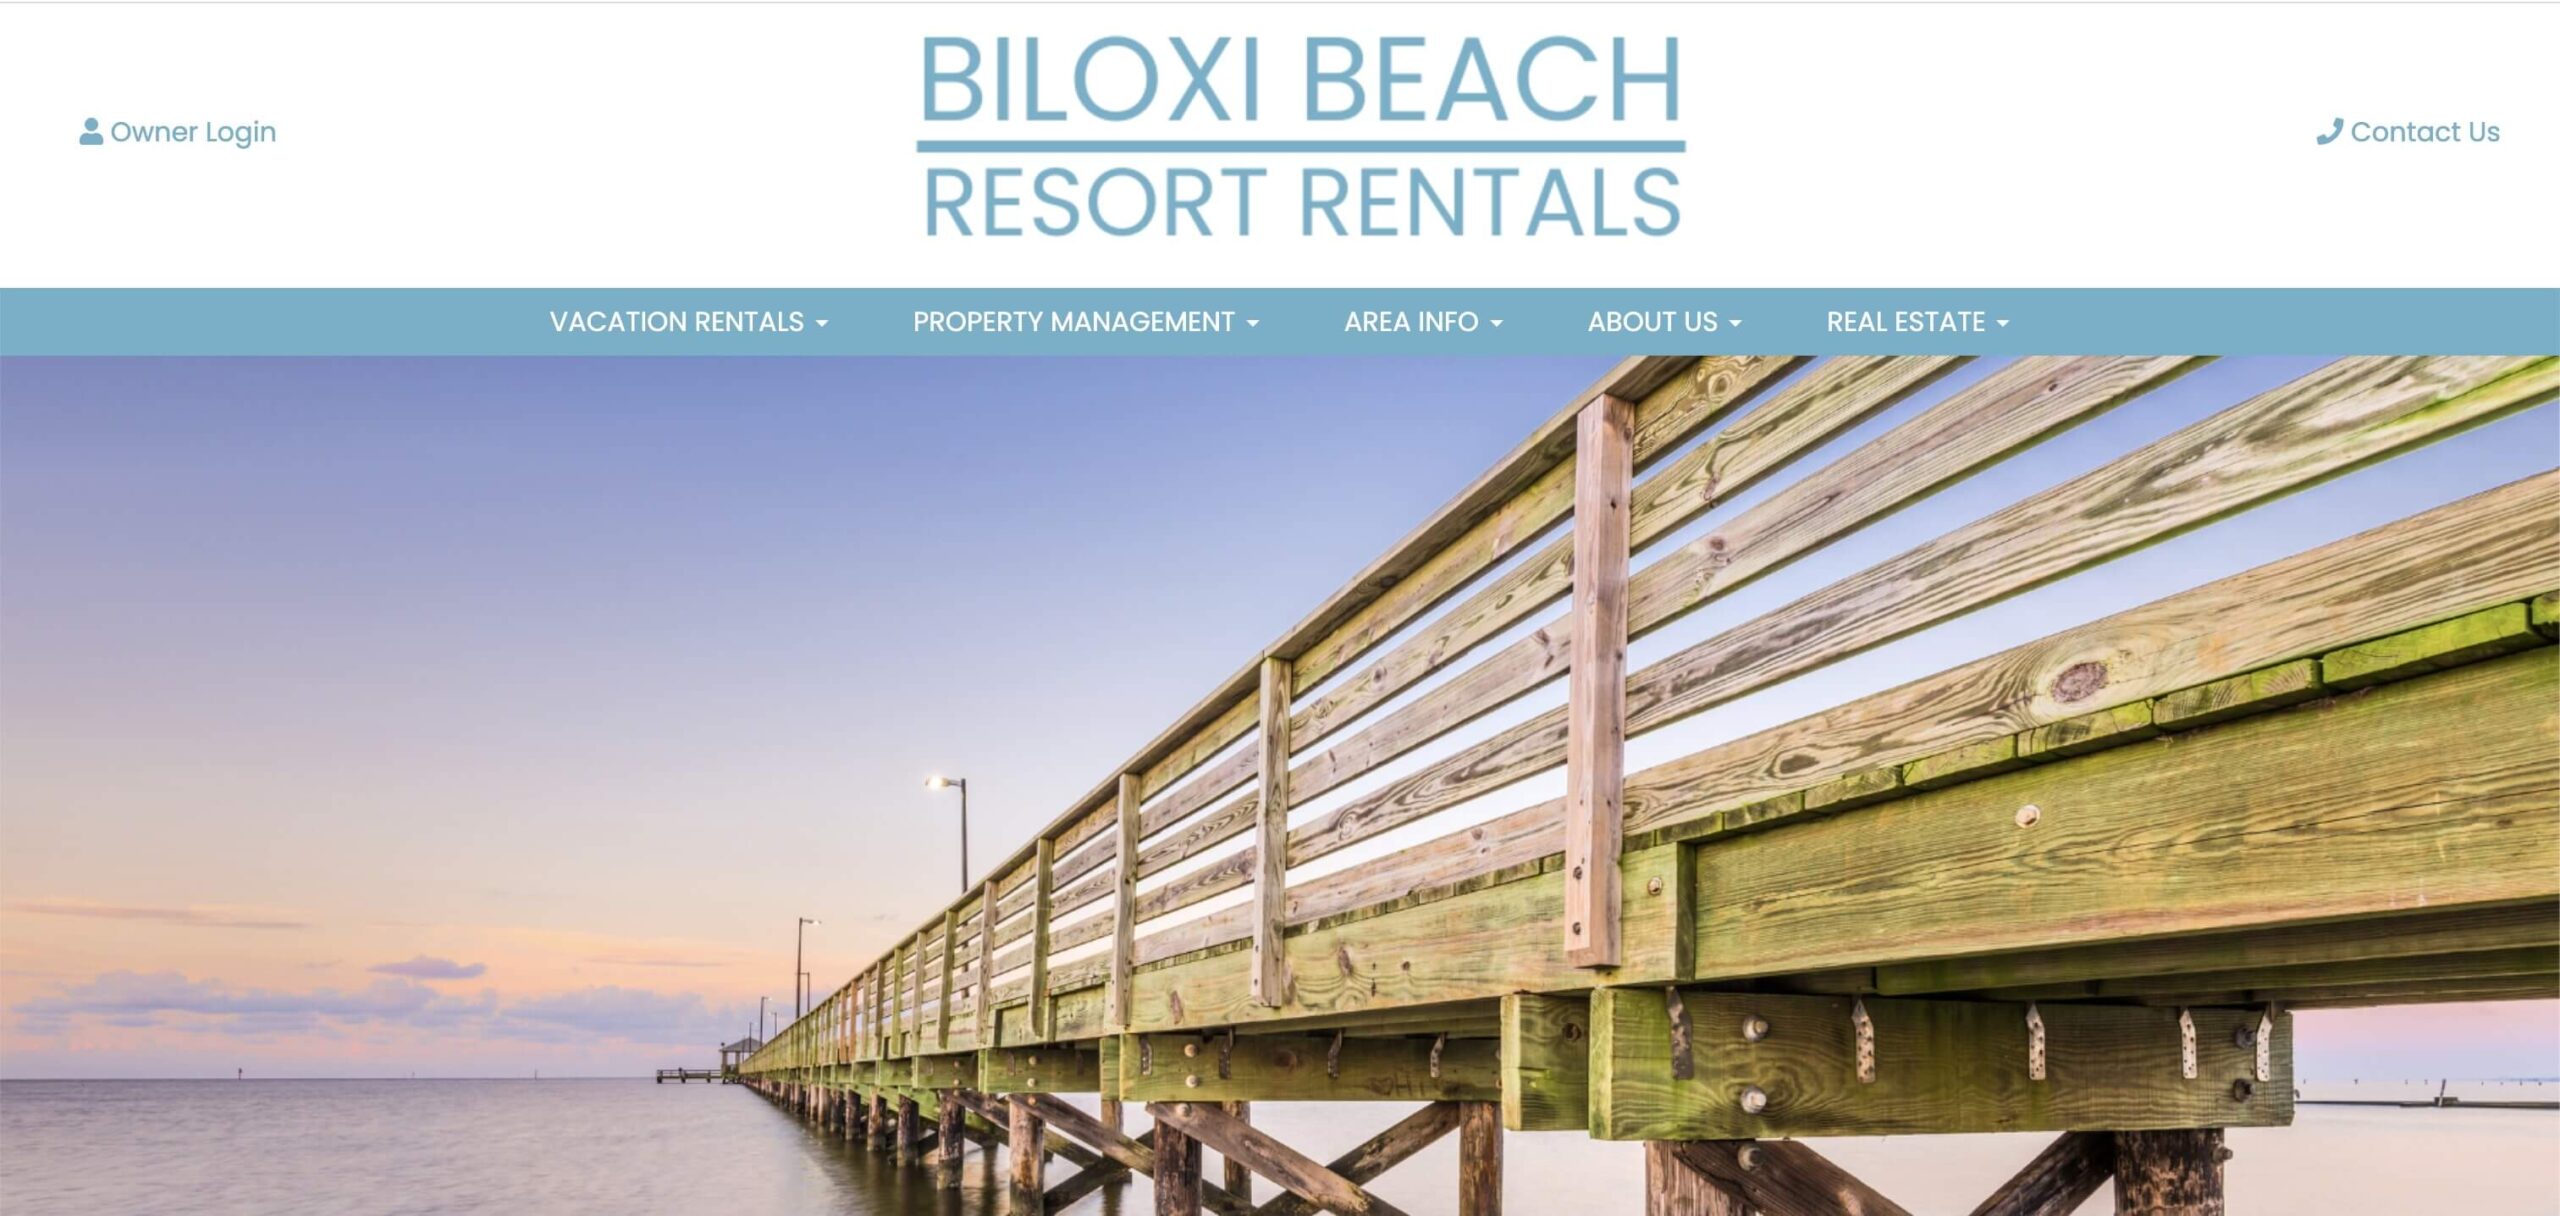 biloxi beach website hero image and main navigation